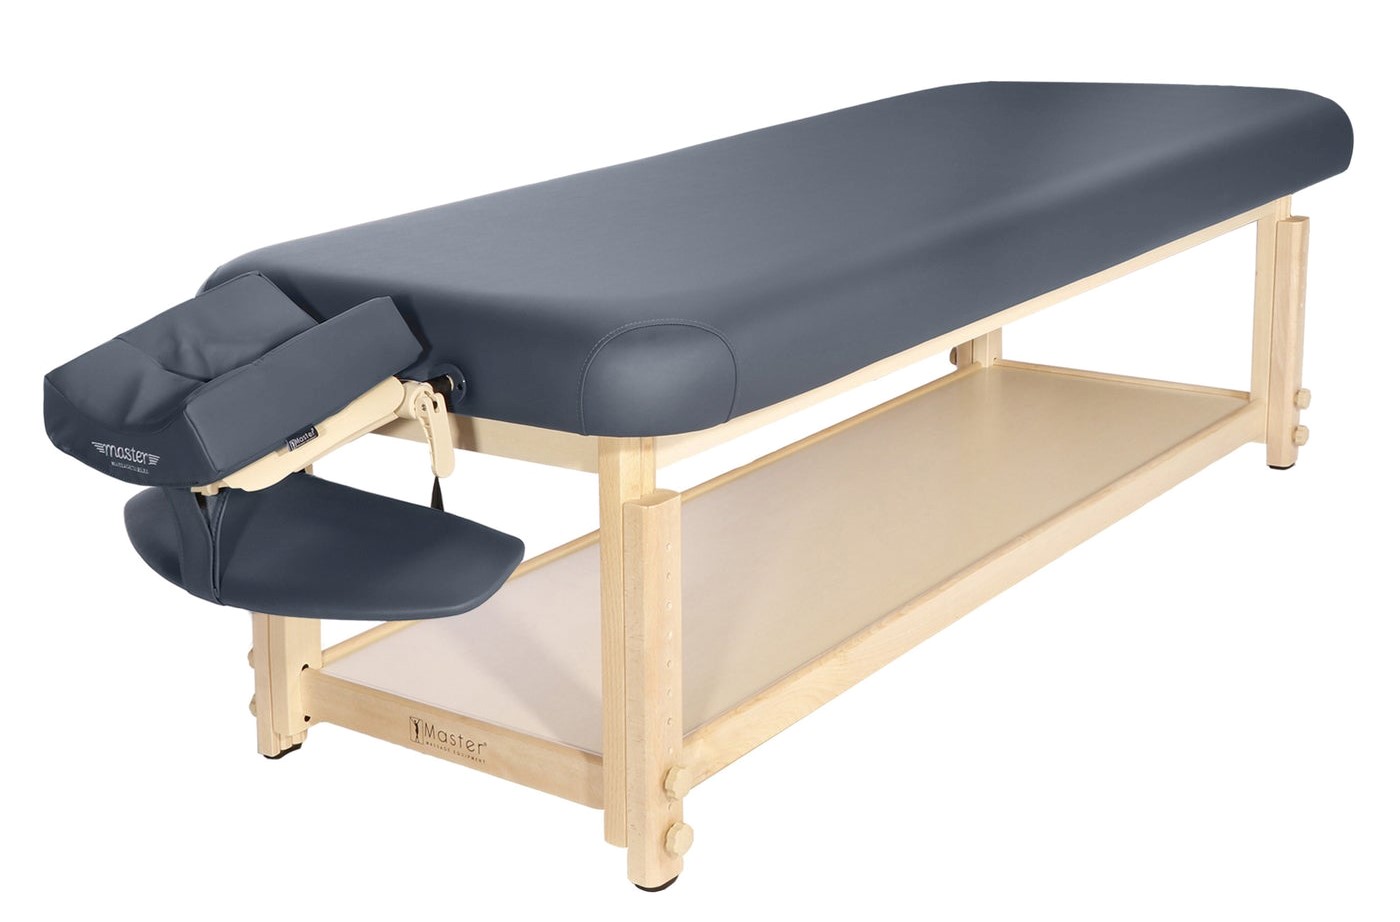 Master Massage Laguna Stationary Treatment Table, 30" - 2,500 lbs. Weight Capacity